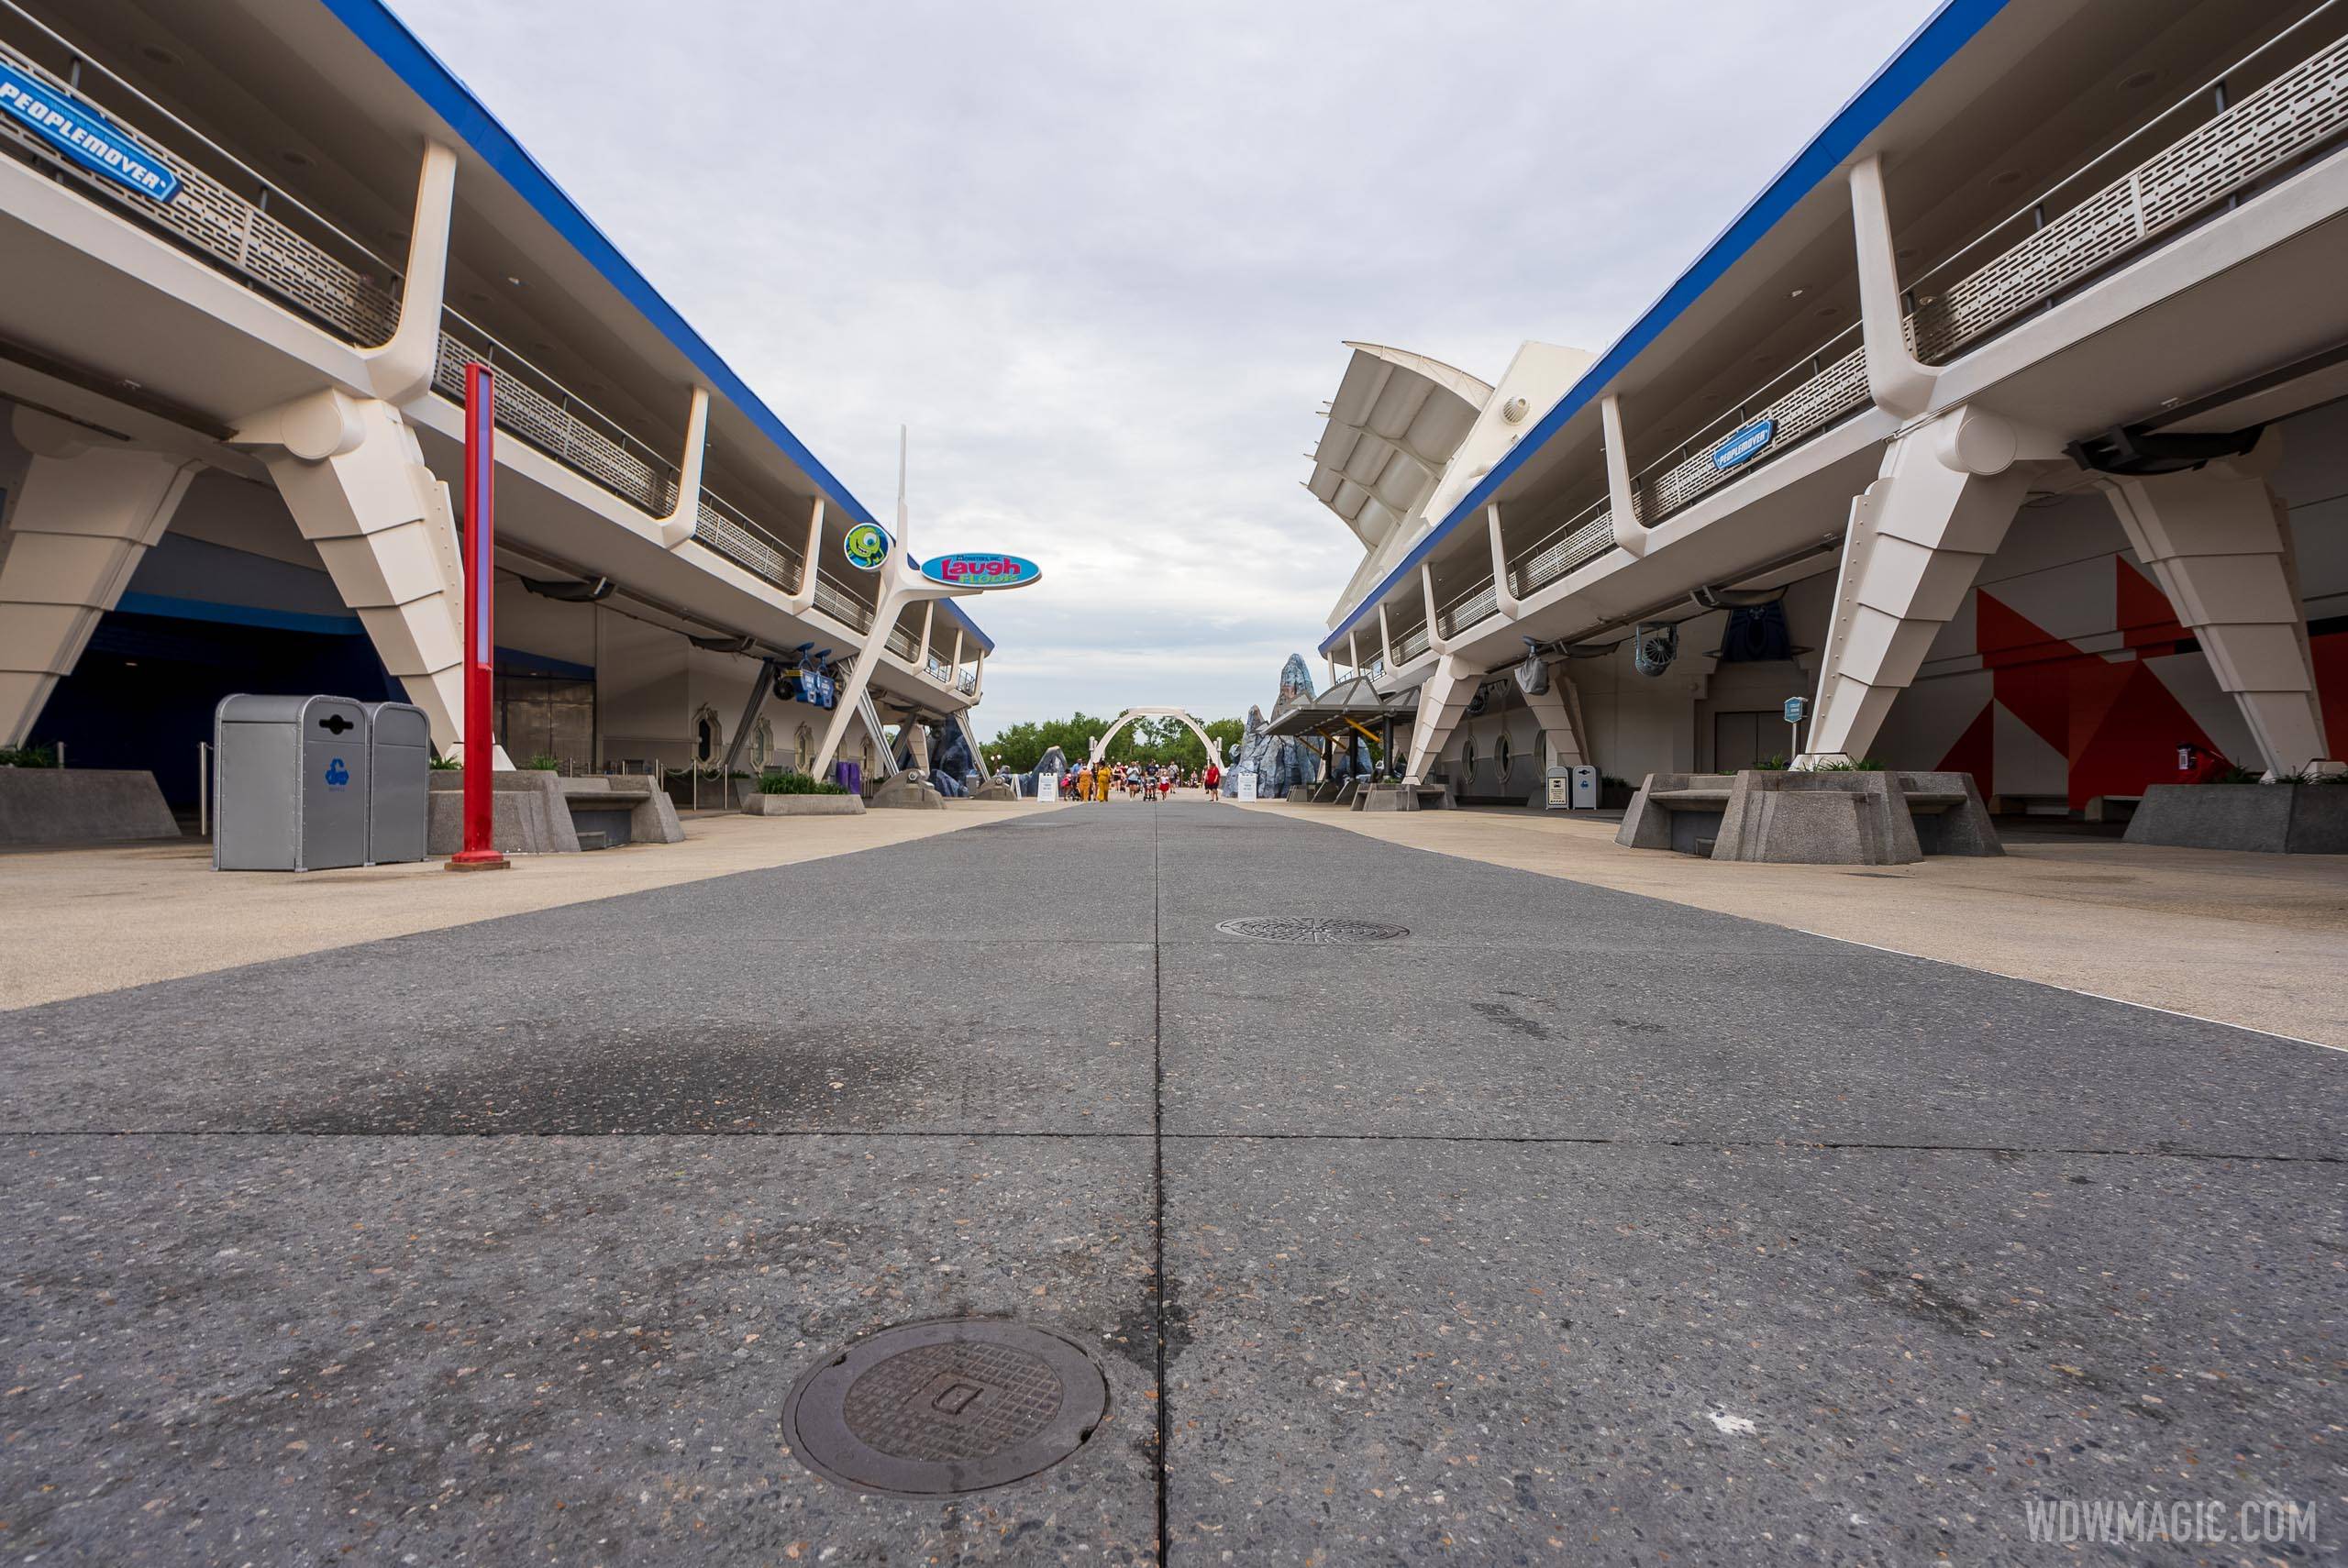 Disney gives the main Magic Kingdom Tomorrowland walkway a much simpler look